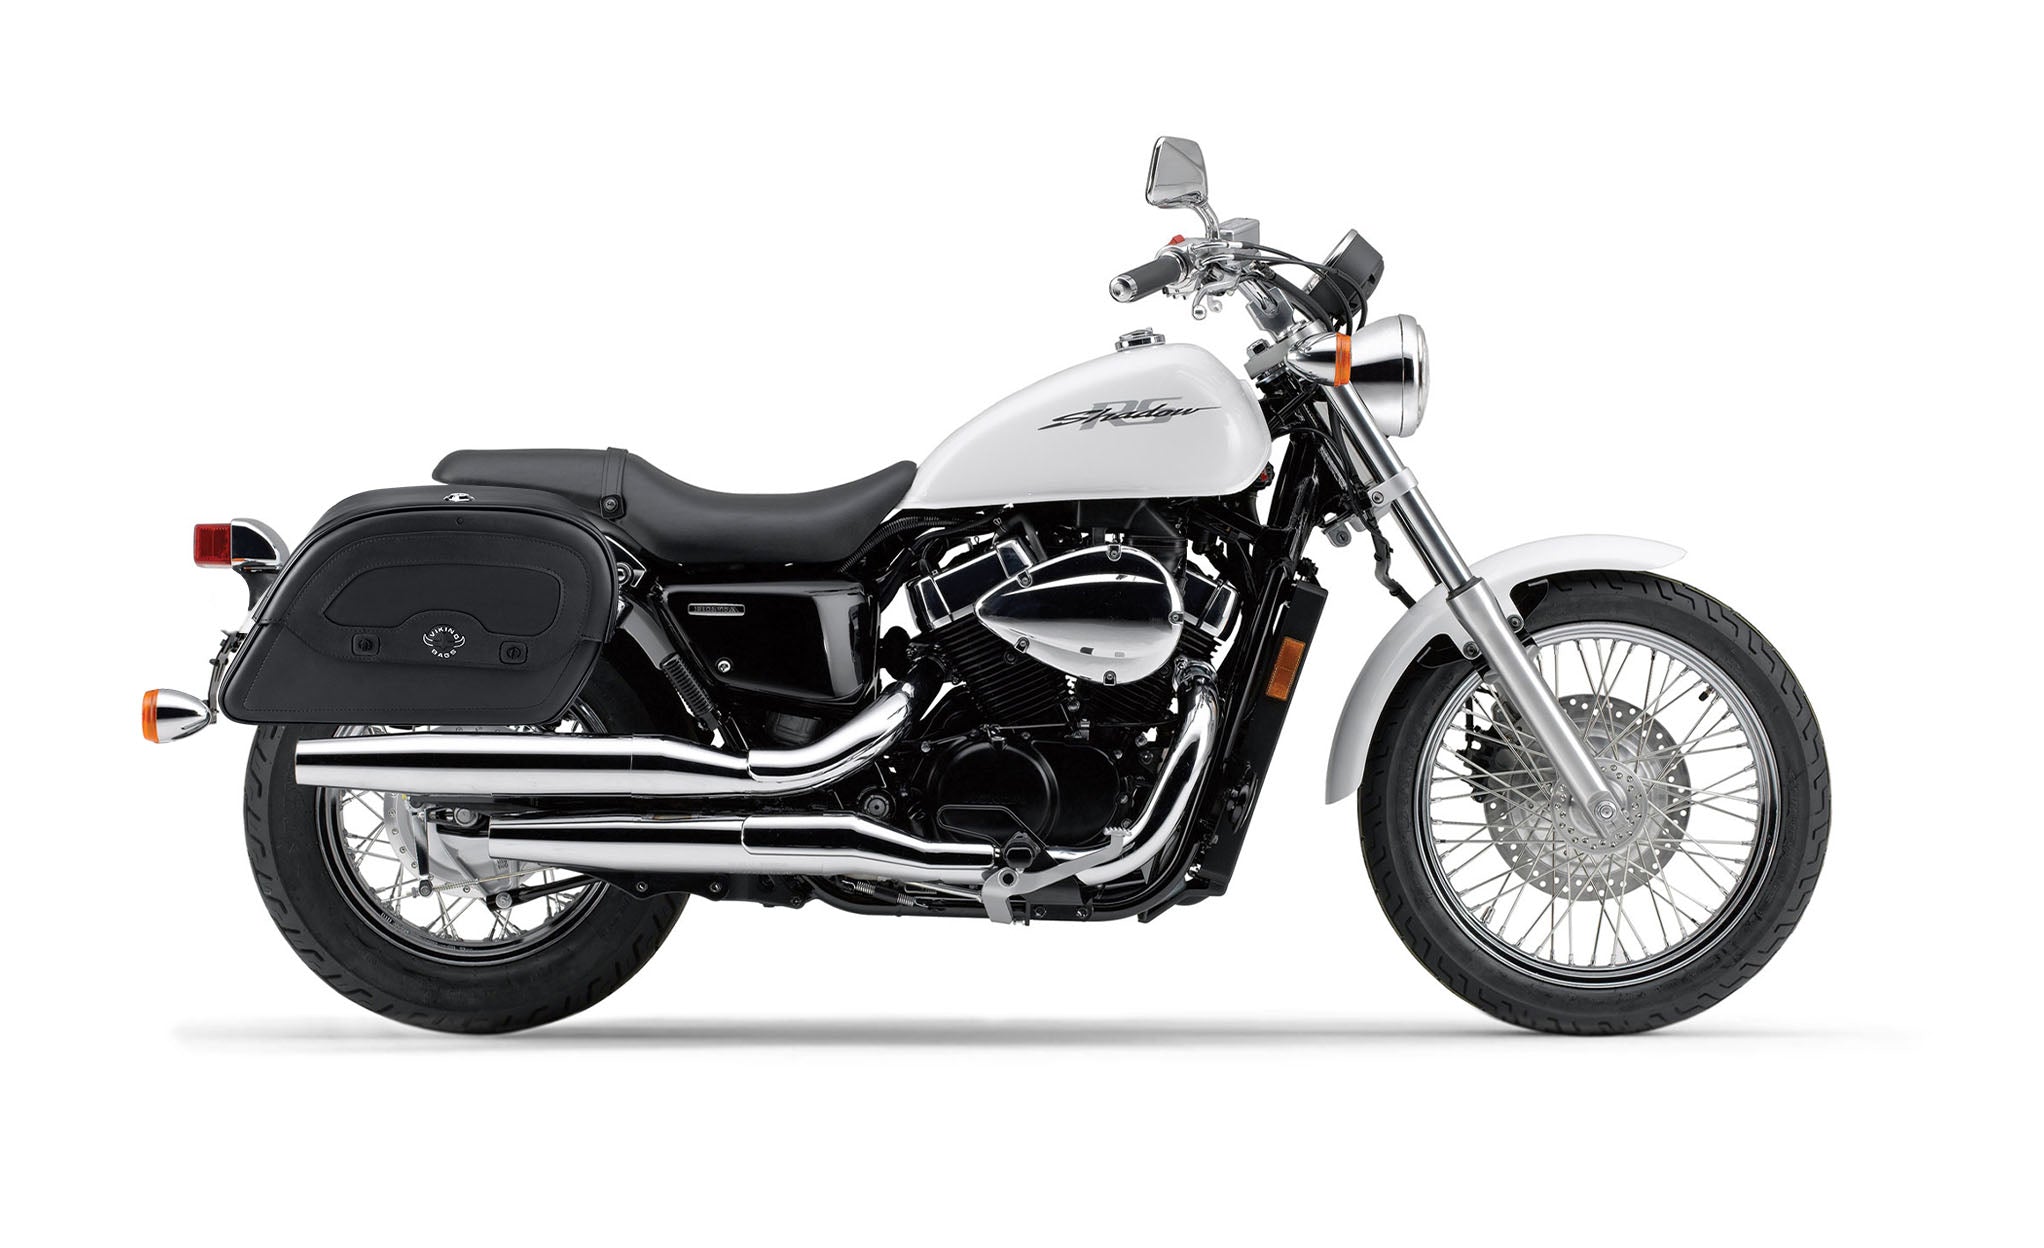 Viking Warrior Large Honda Shadow 750 Rs Shock Cut Out Leather Motorcycle Saddlebags on Bike Photo @expand